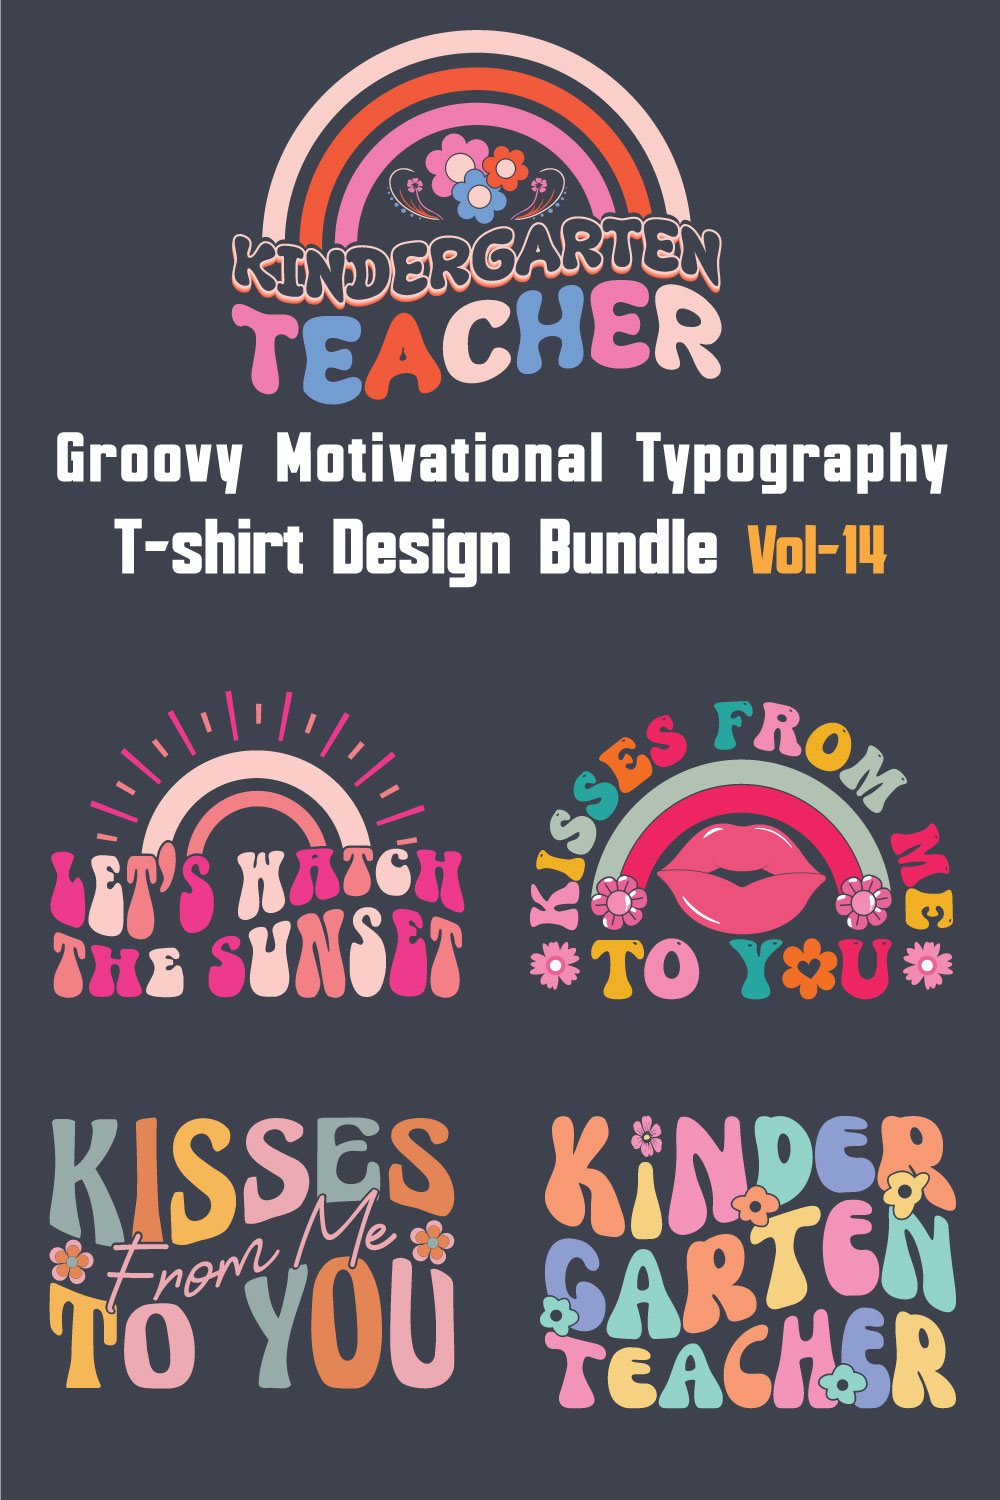 Groovy Motivational Typography T-shirt Design Bundle Vol-14 pinterest preview image.